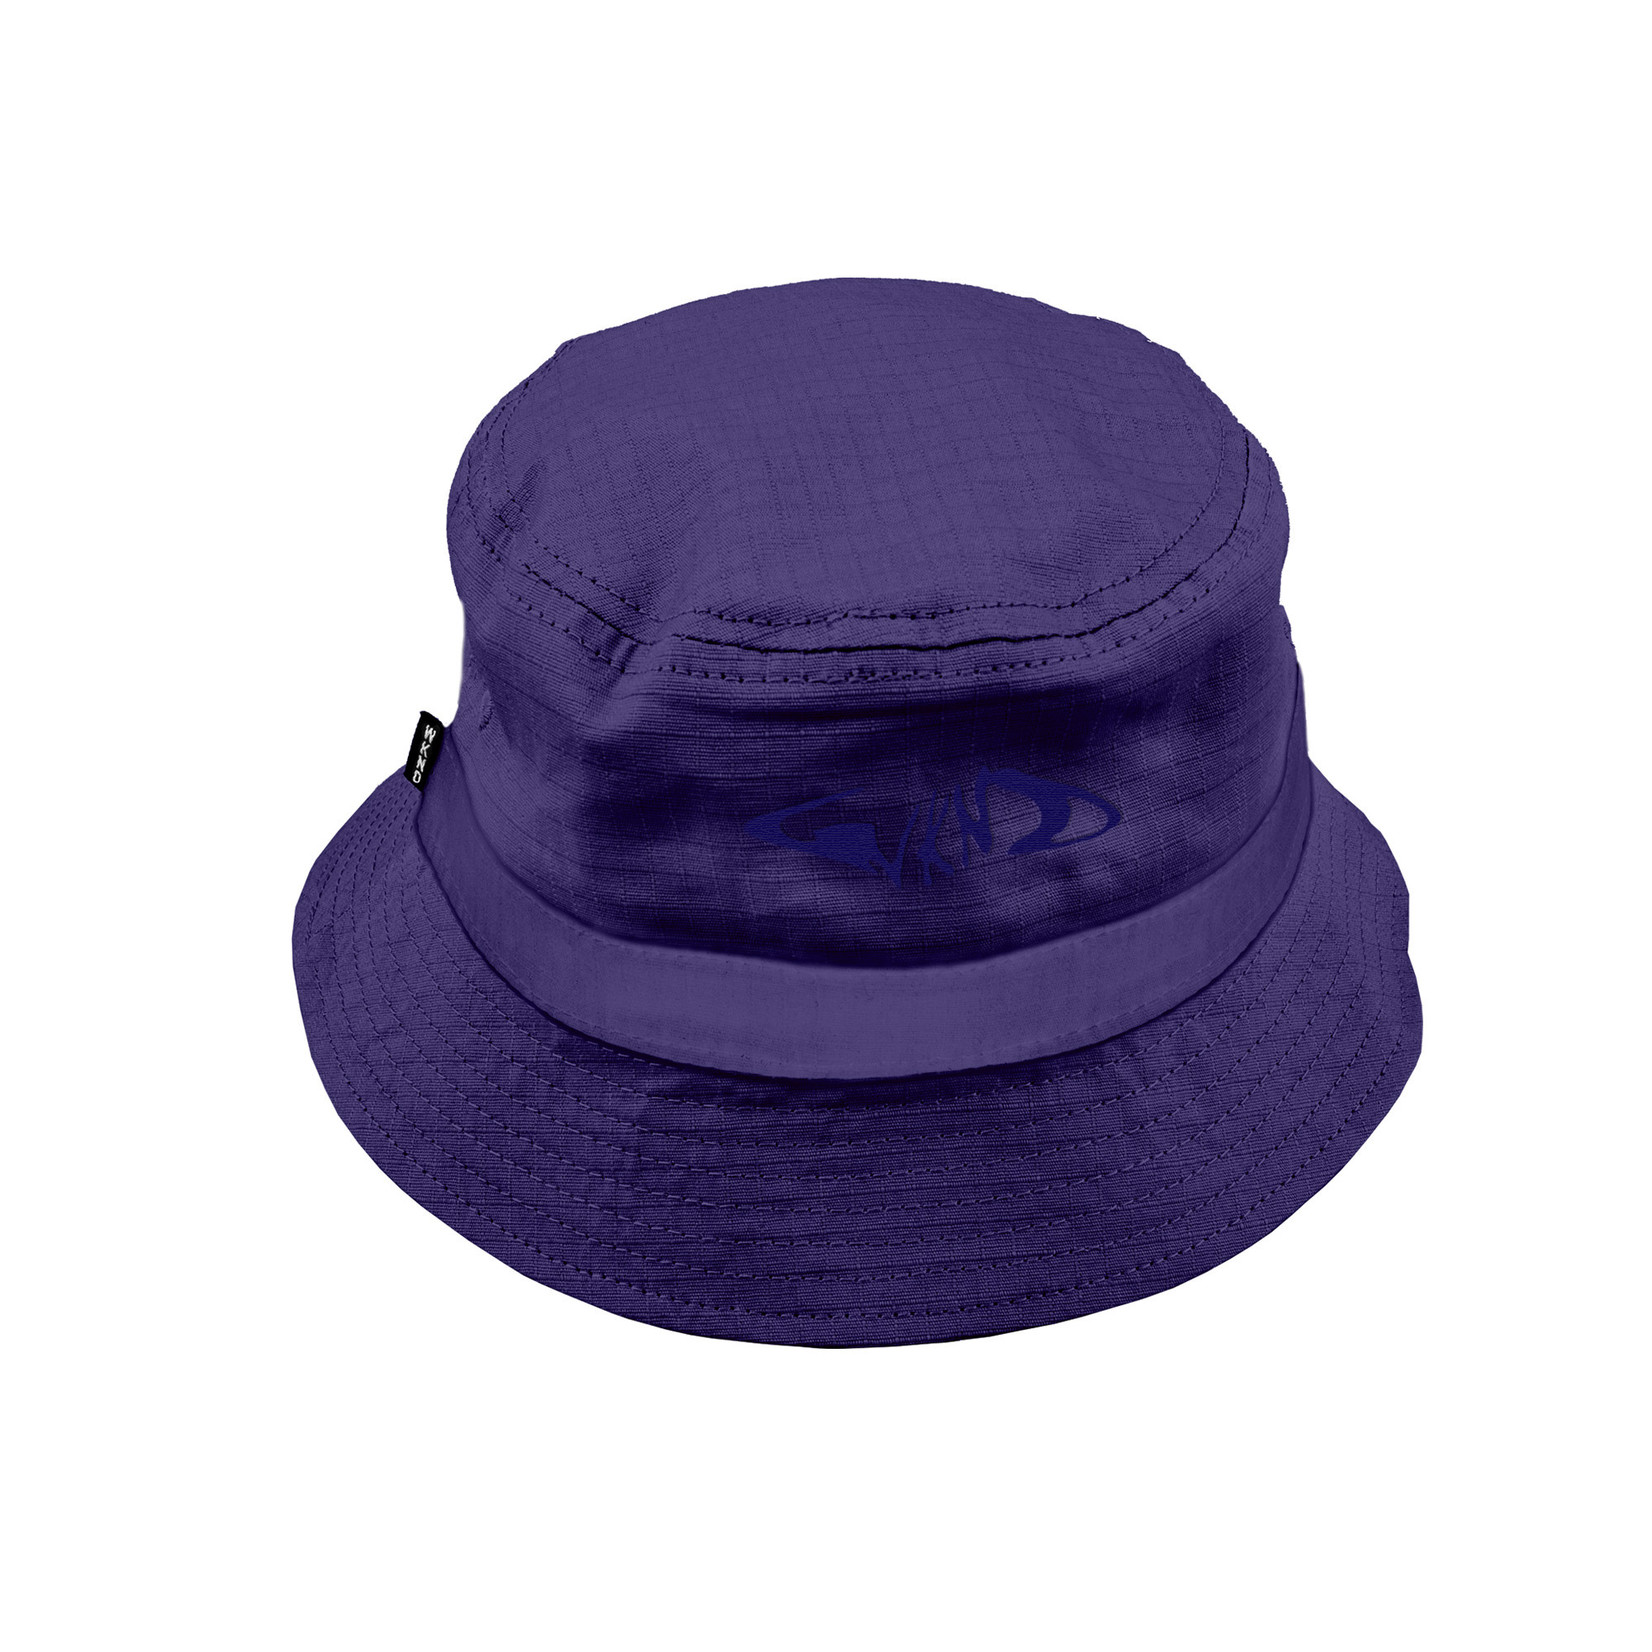 WKND WKND Fishbone Bucket Purple